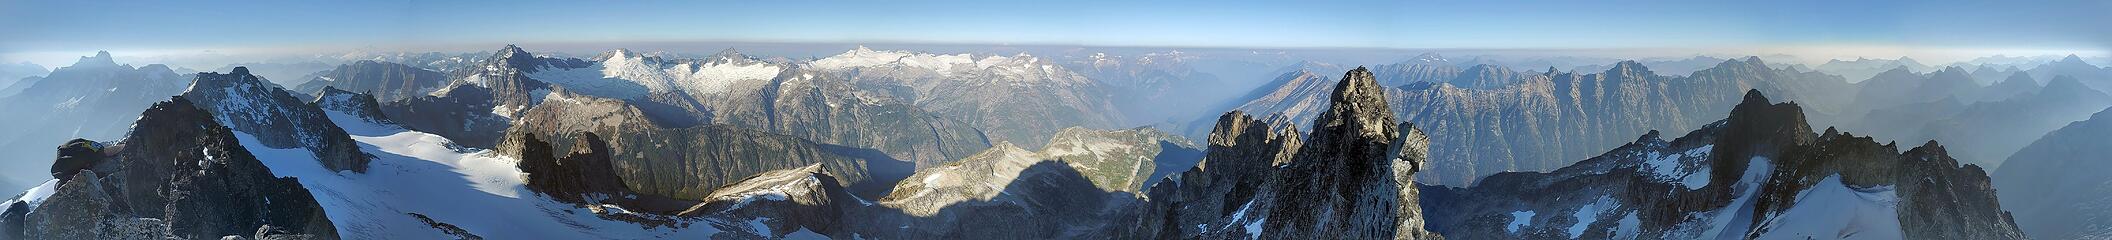 Summit Panorama, stitched by Google